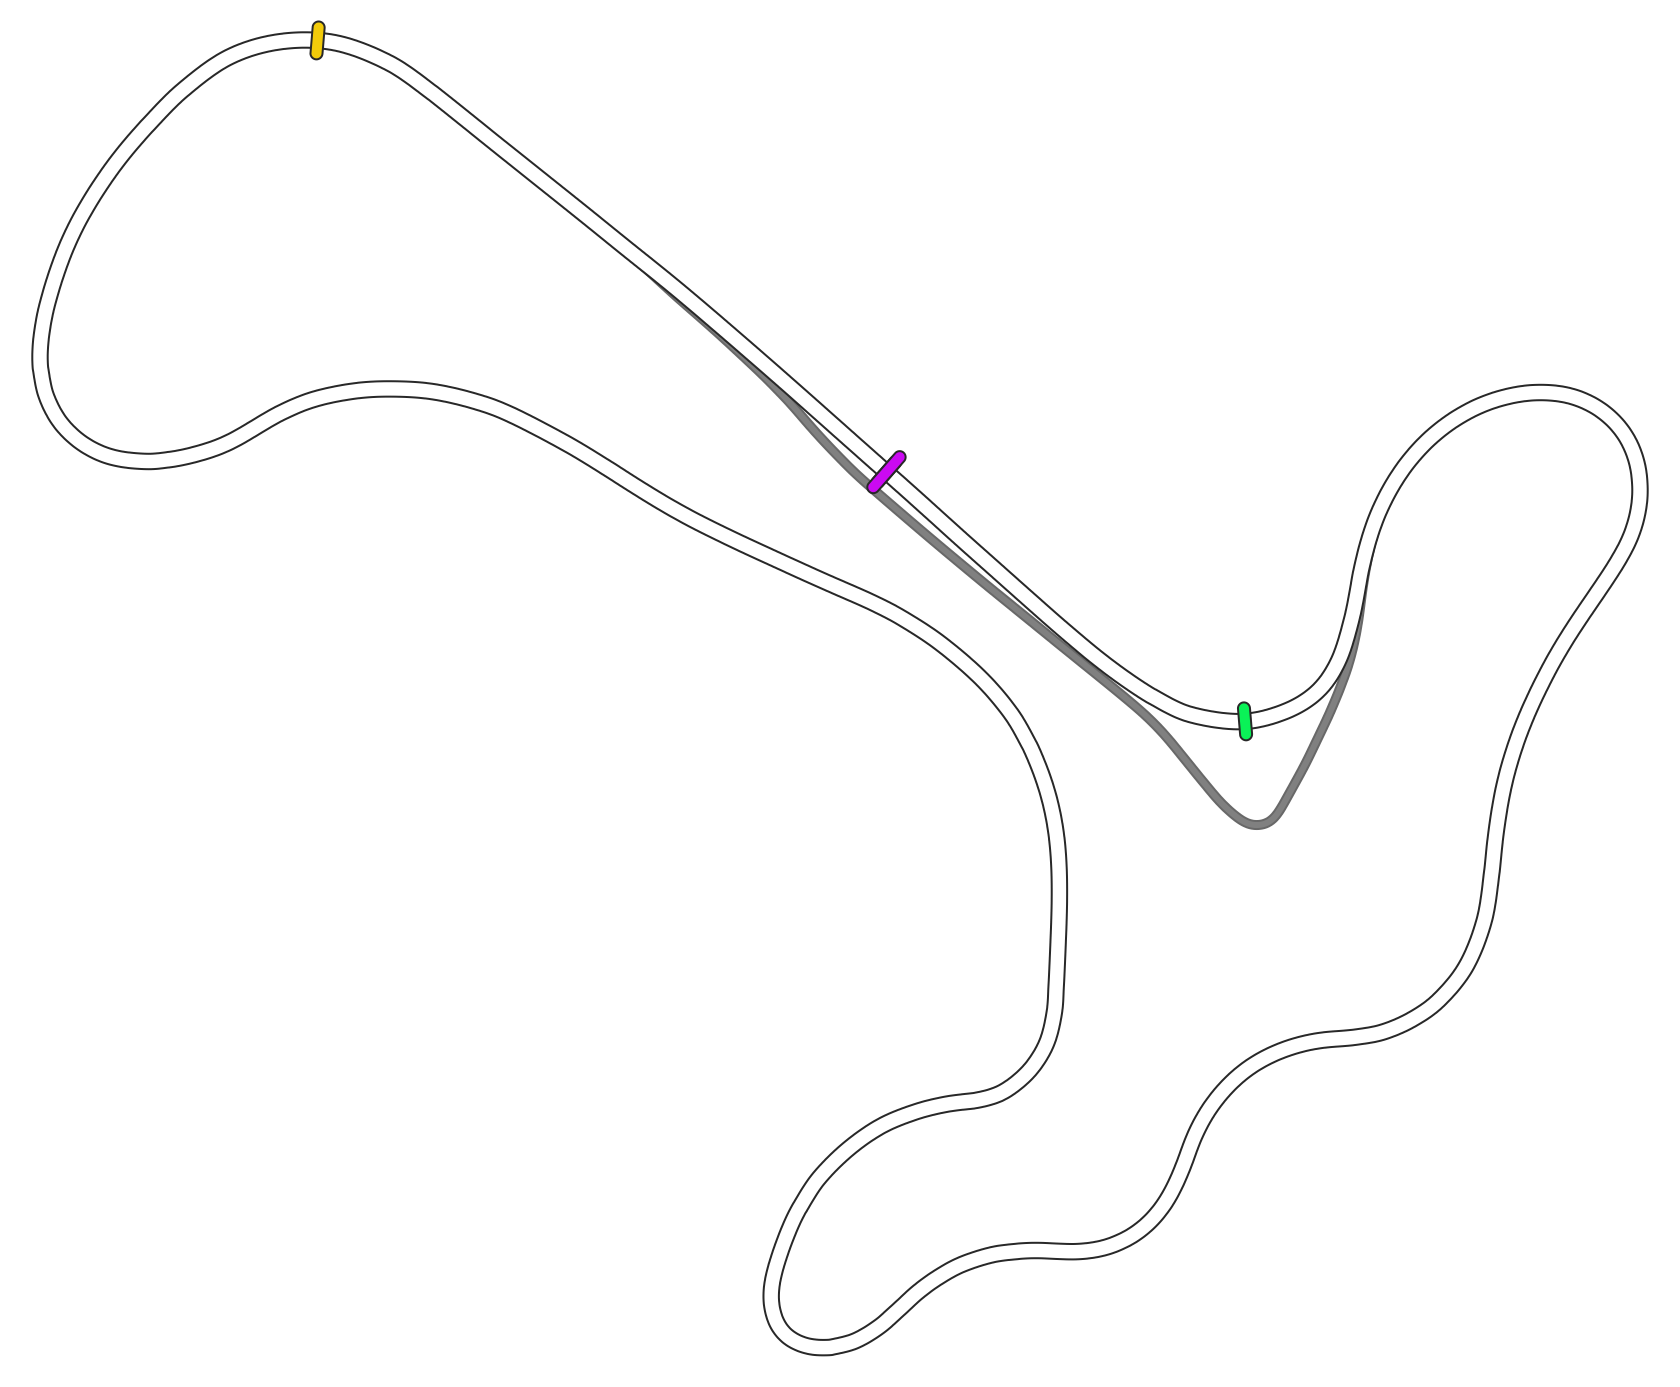 Horsma Raceway - Club layout